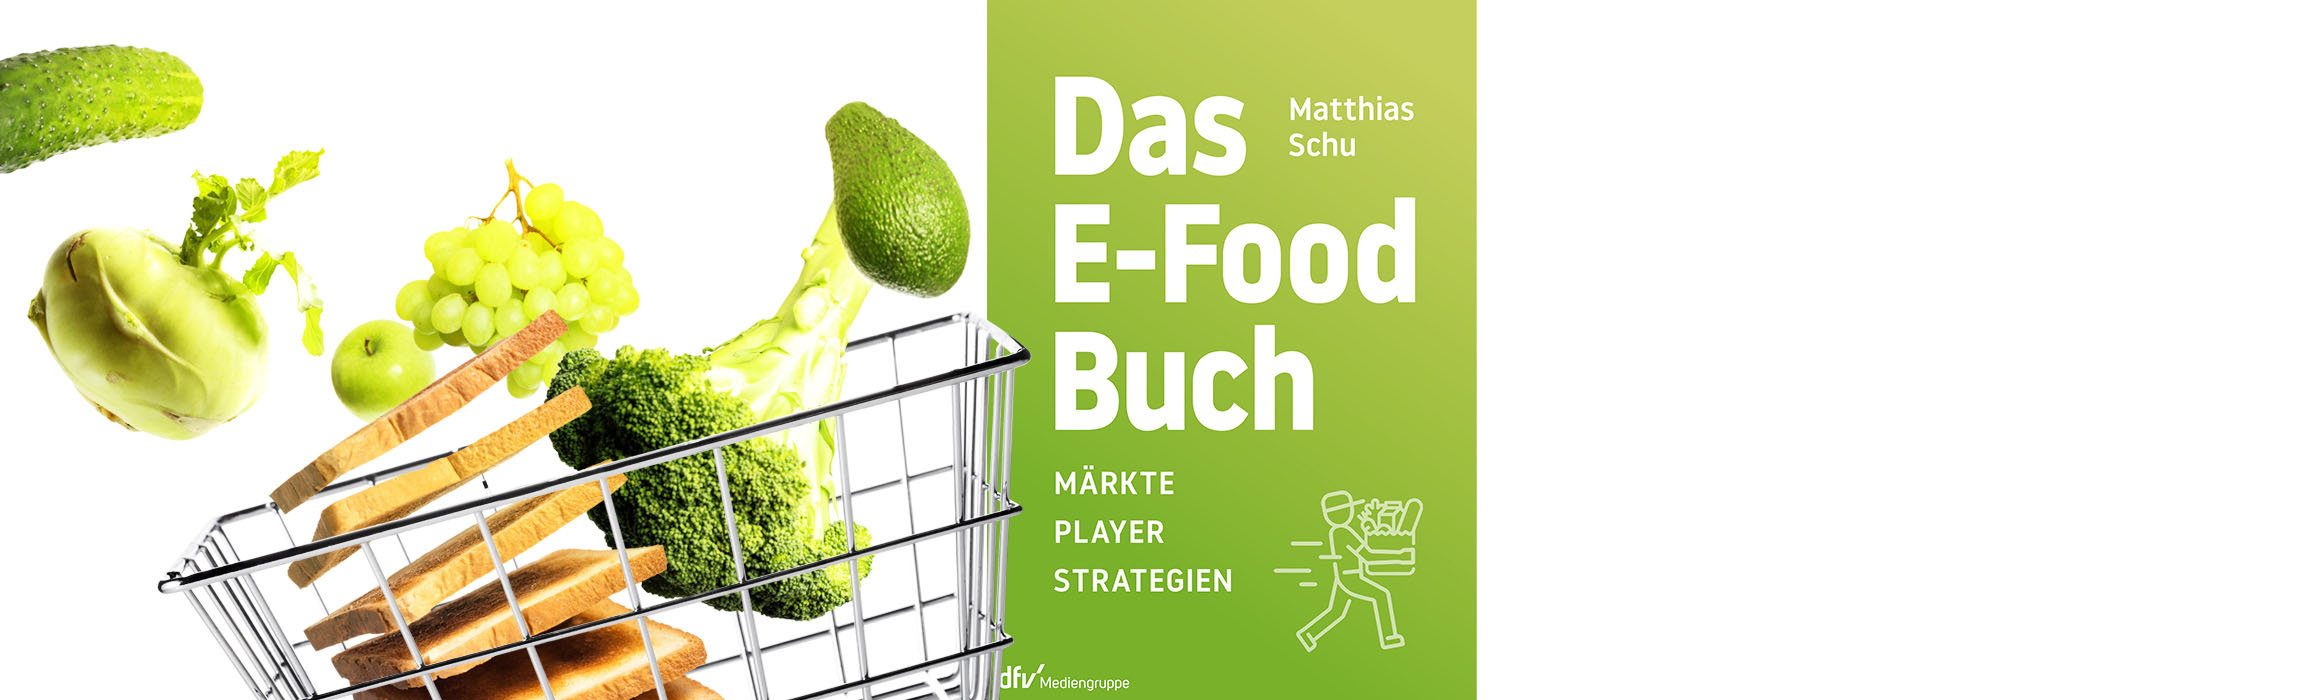 Das E-Food Buch widmet sich dem Lebensmittel-Onlinehandel.